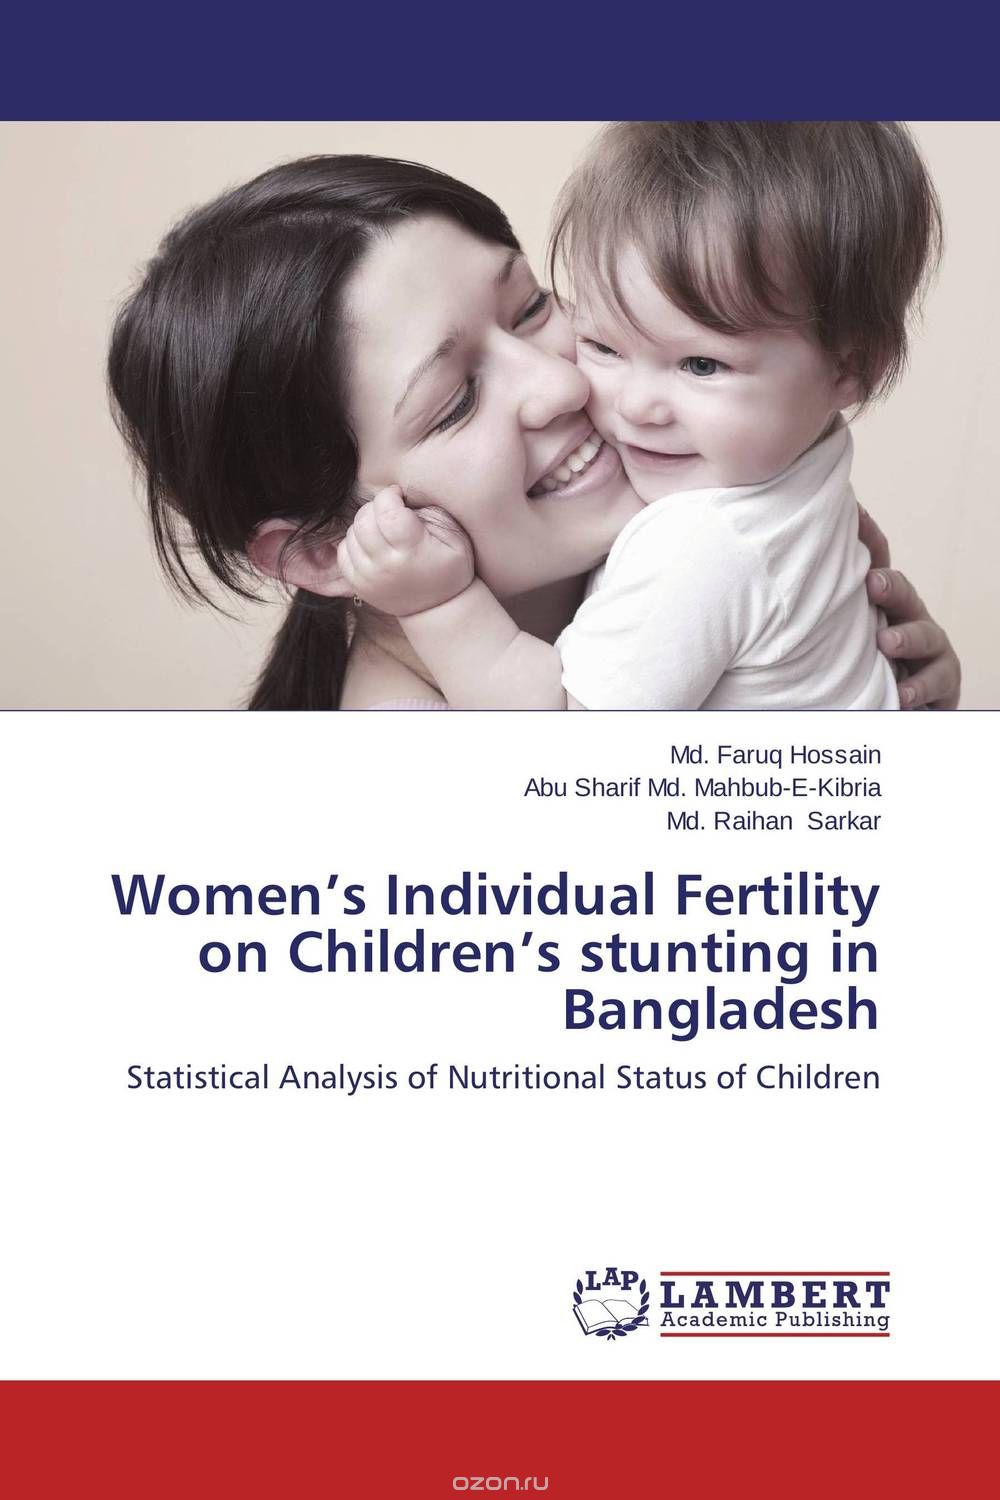 Скачать книгу "Women’s Individual Fertility on Children’s stunting in Bangladesh"